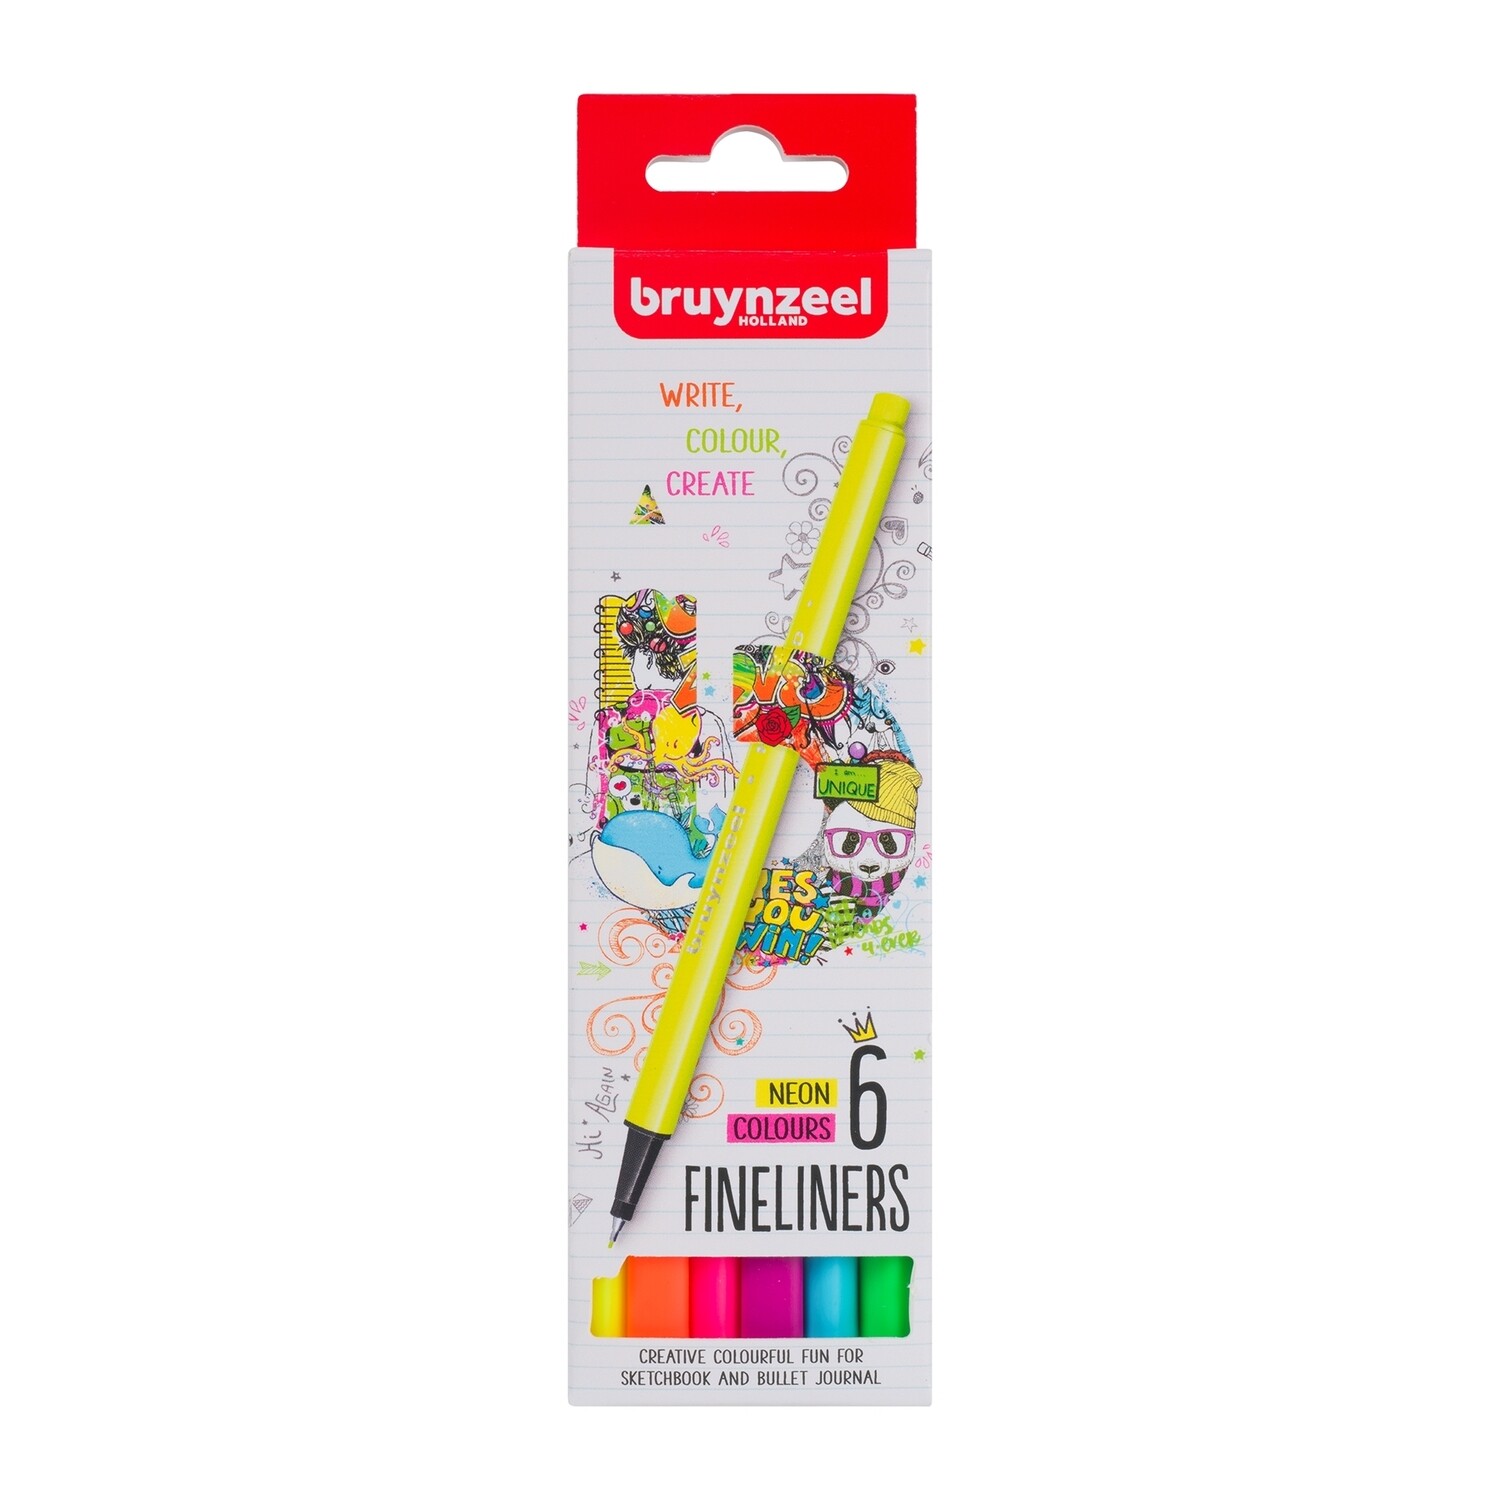 Bruynzeel - Fineliners - 6 Colours - Neon